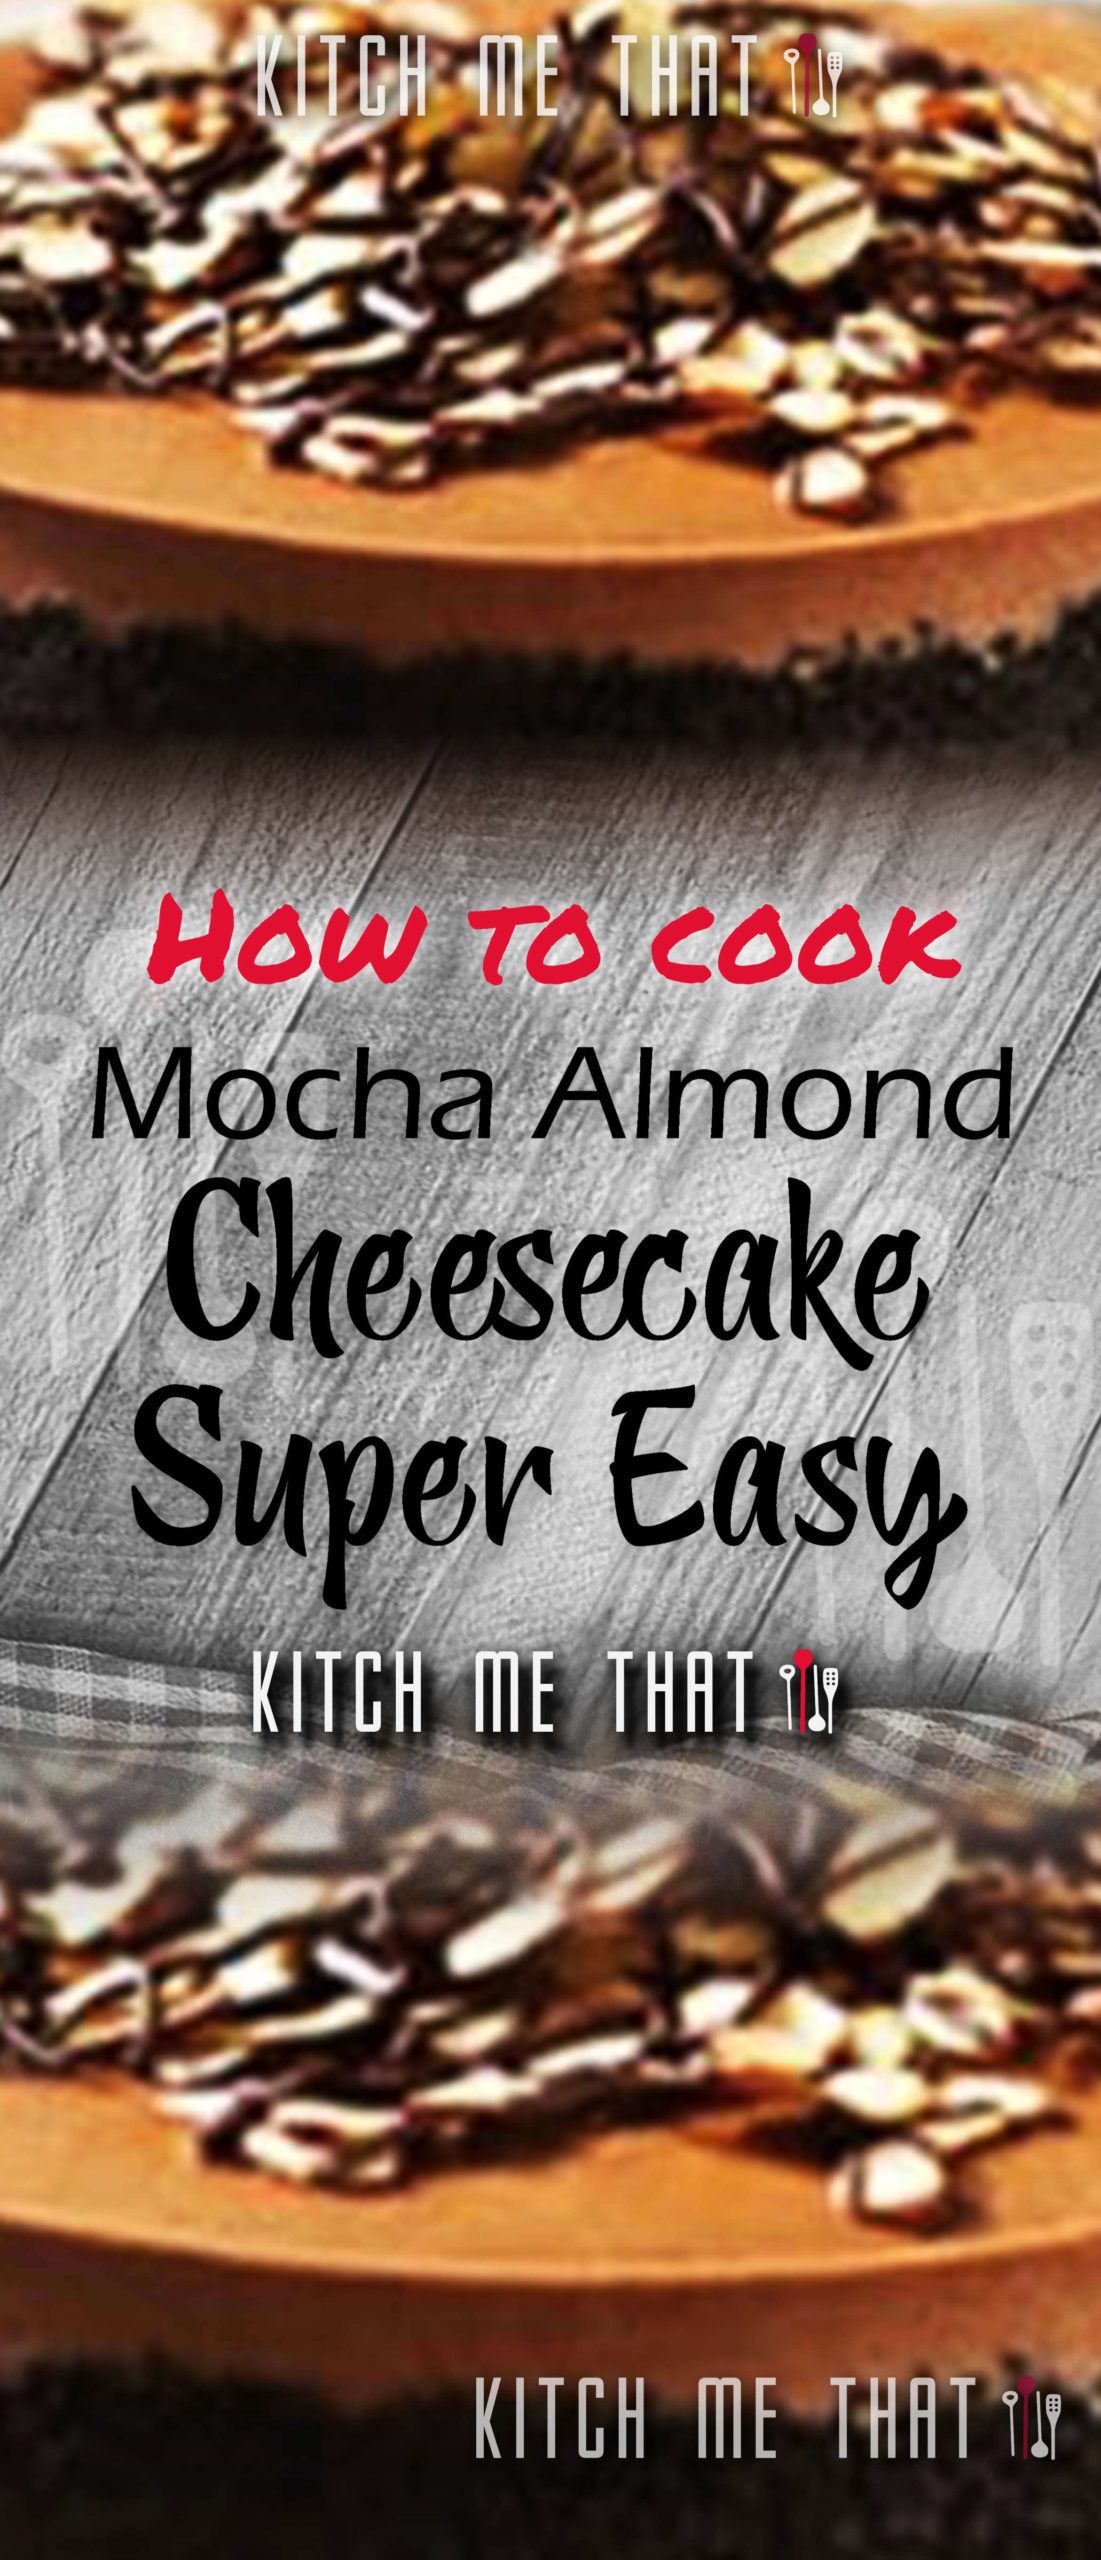 Mocha-Almond Cheesecake